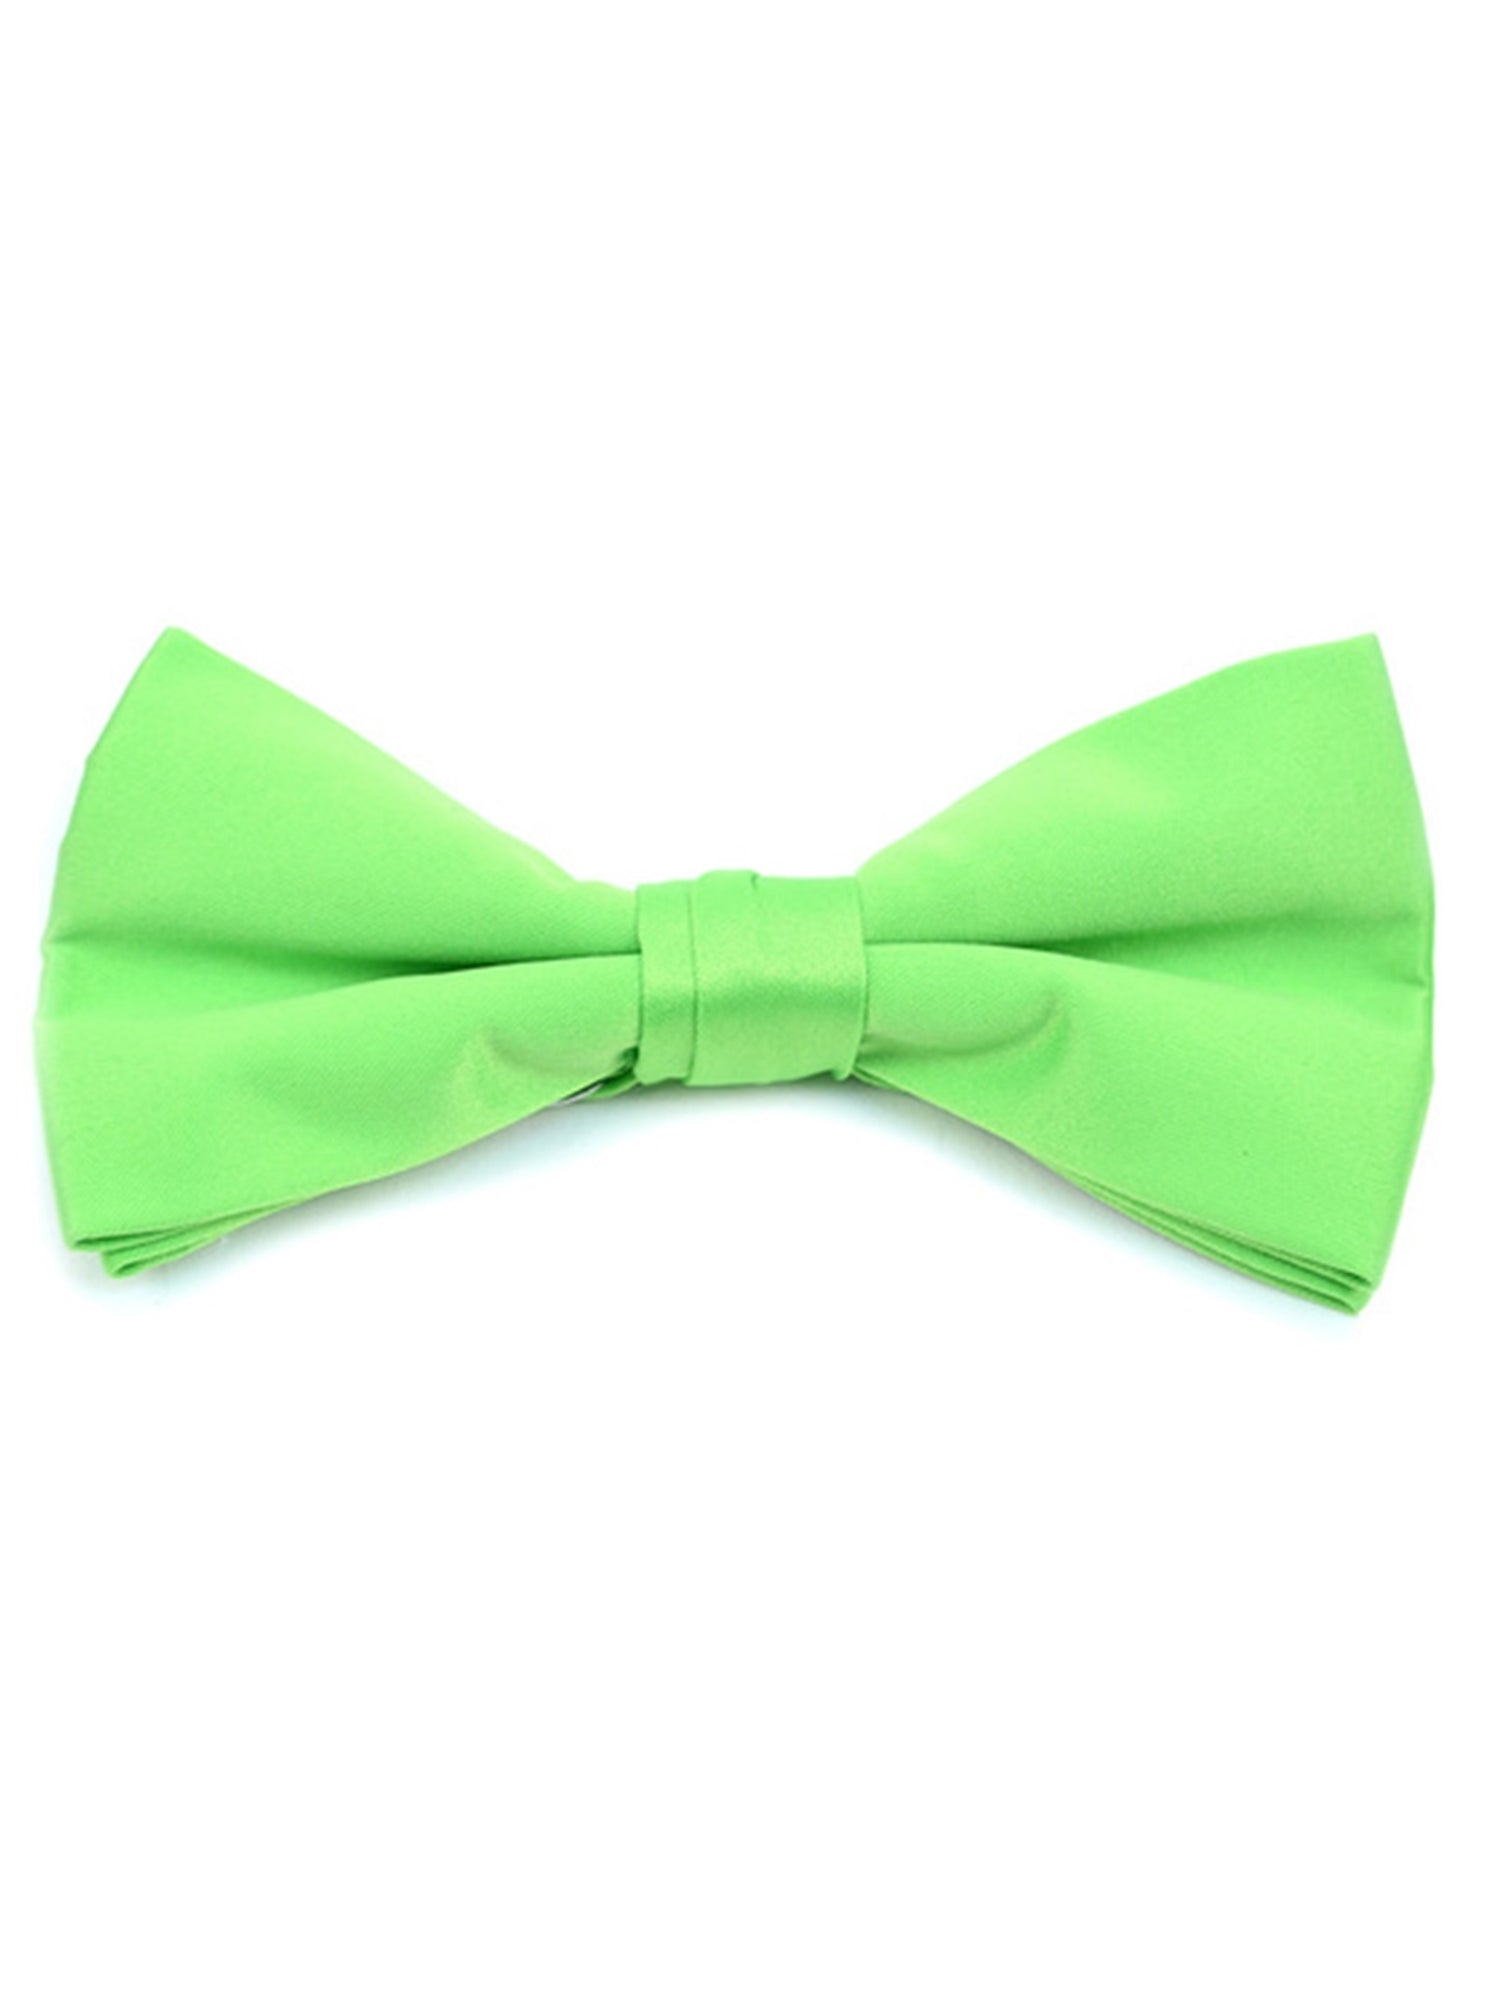 Men's Pre-tied Clip On Bow Tie - Formal Tuxedo Solid Color Men's Solid Color Bow Tie TheDapperTie Neon Green One Size 